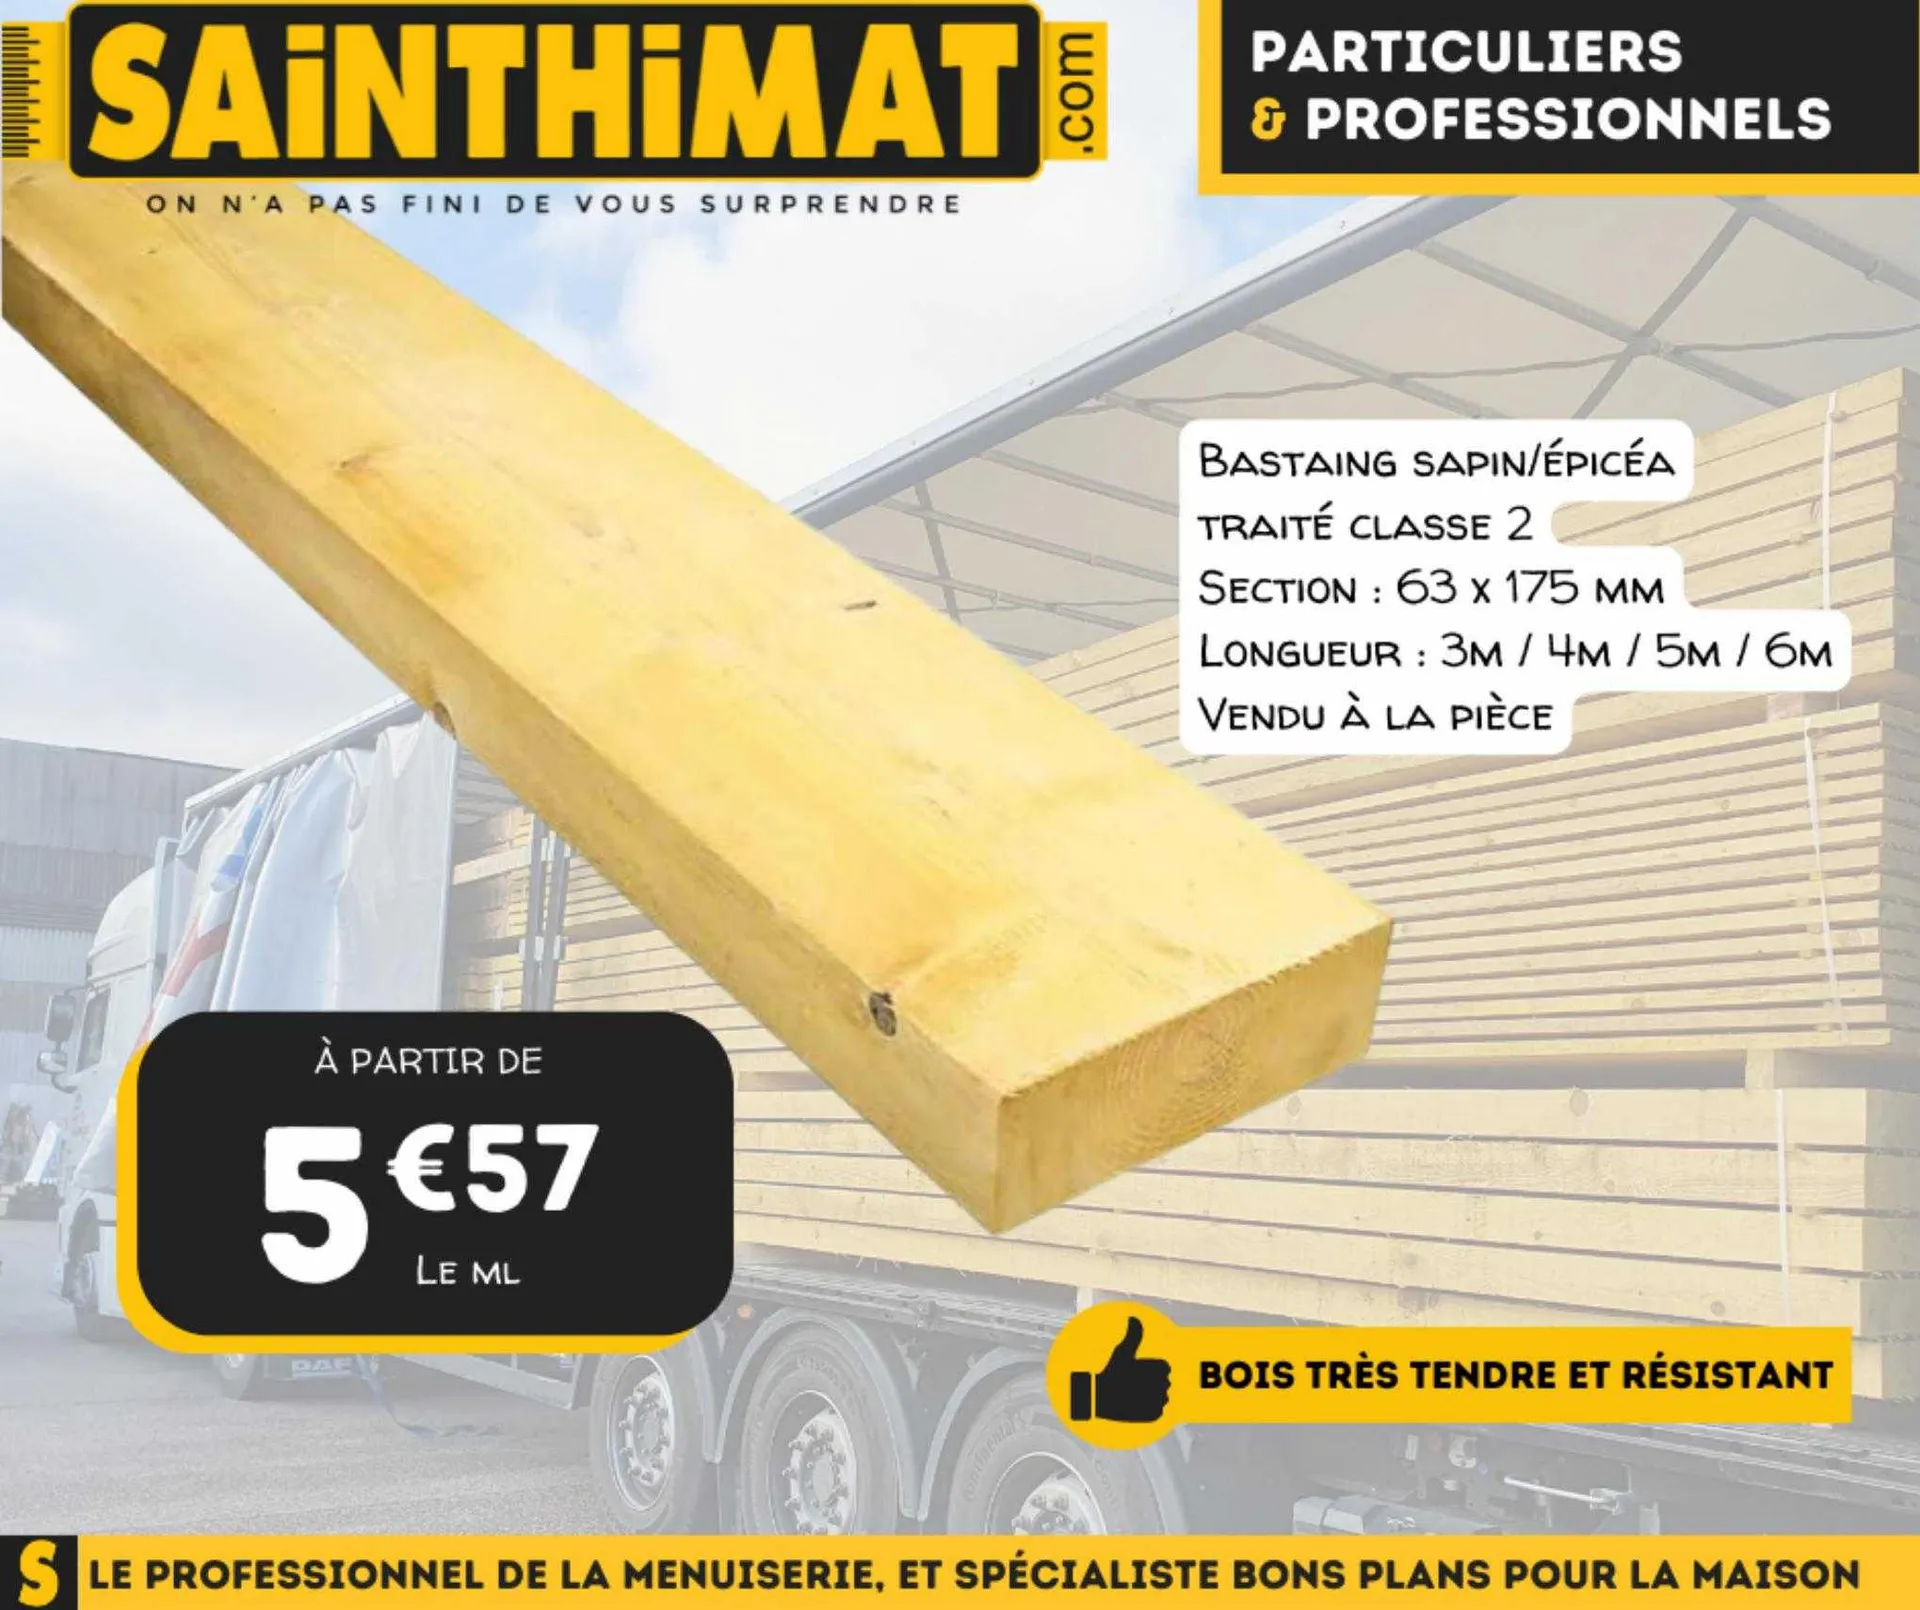 Catalogue Sainthimat - 2